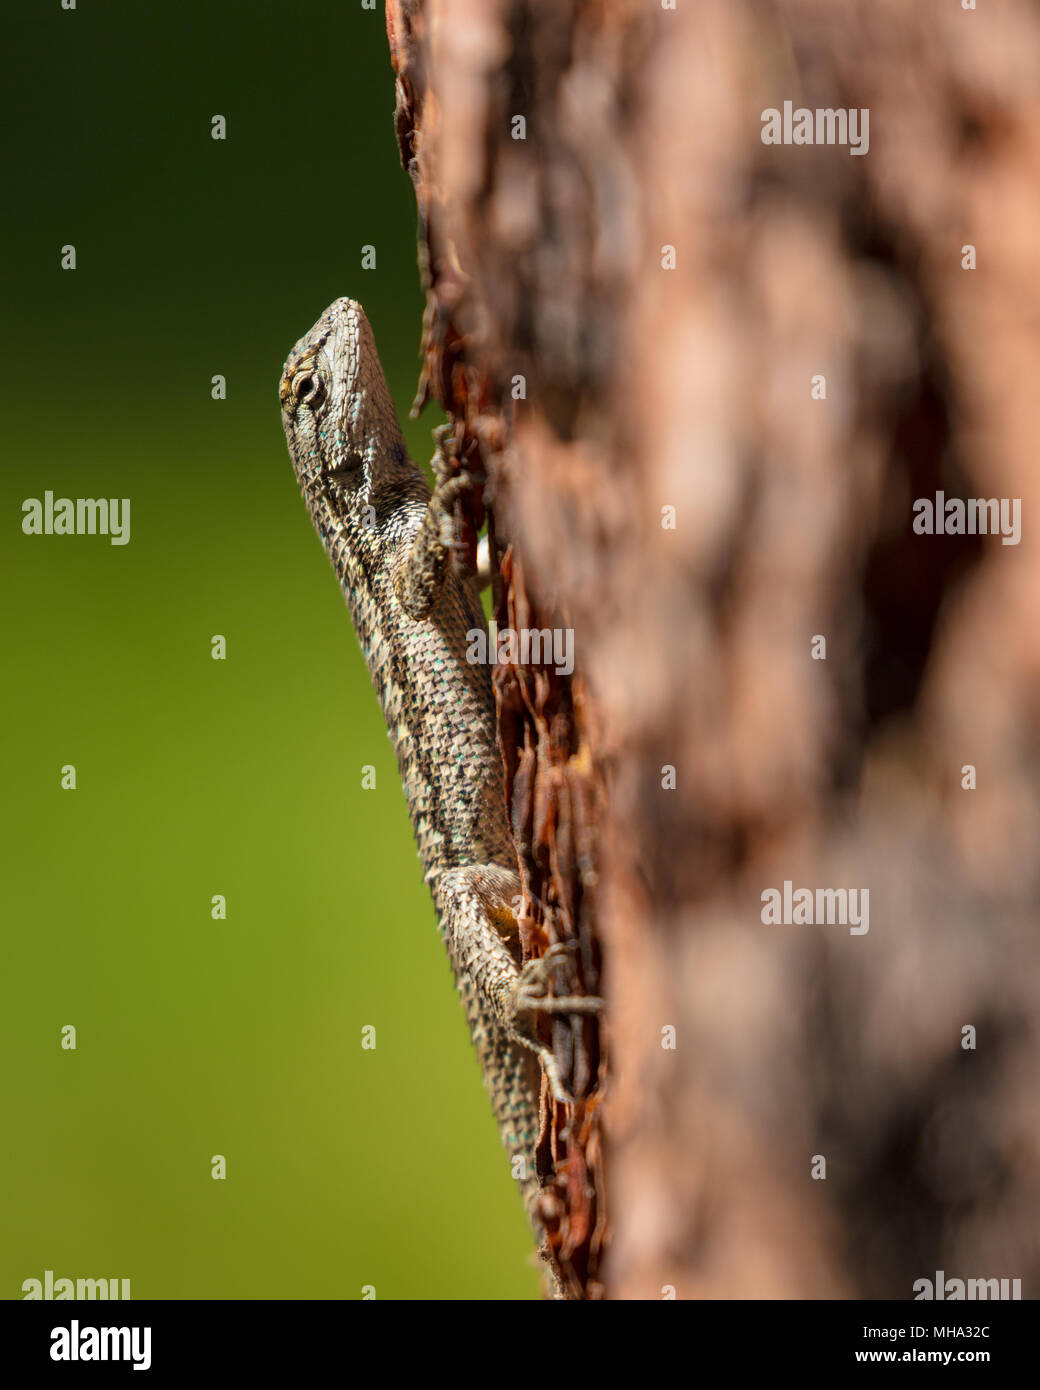 Lizard Kletterbaum Stockfoto